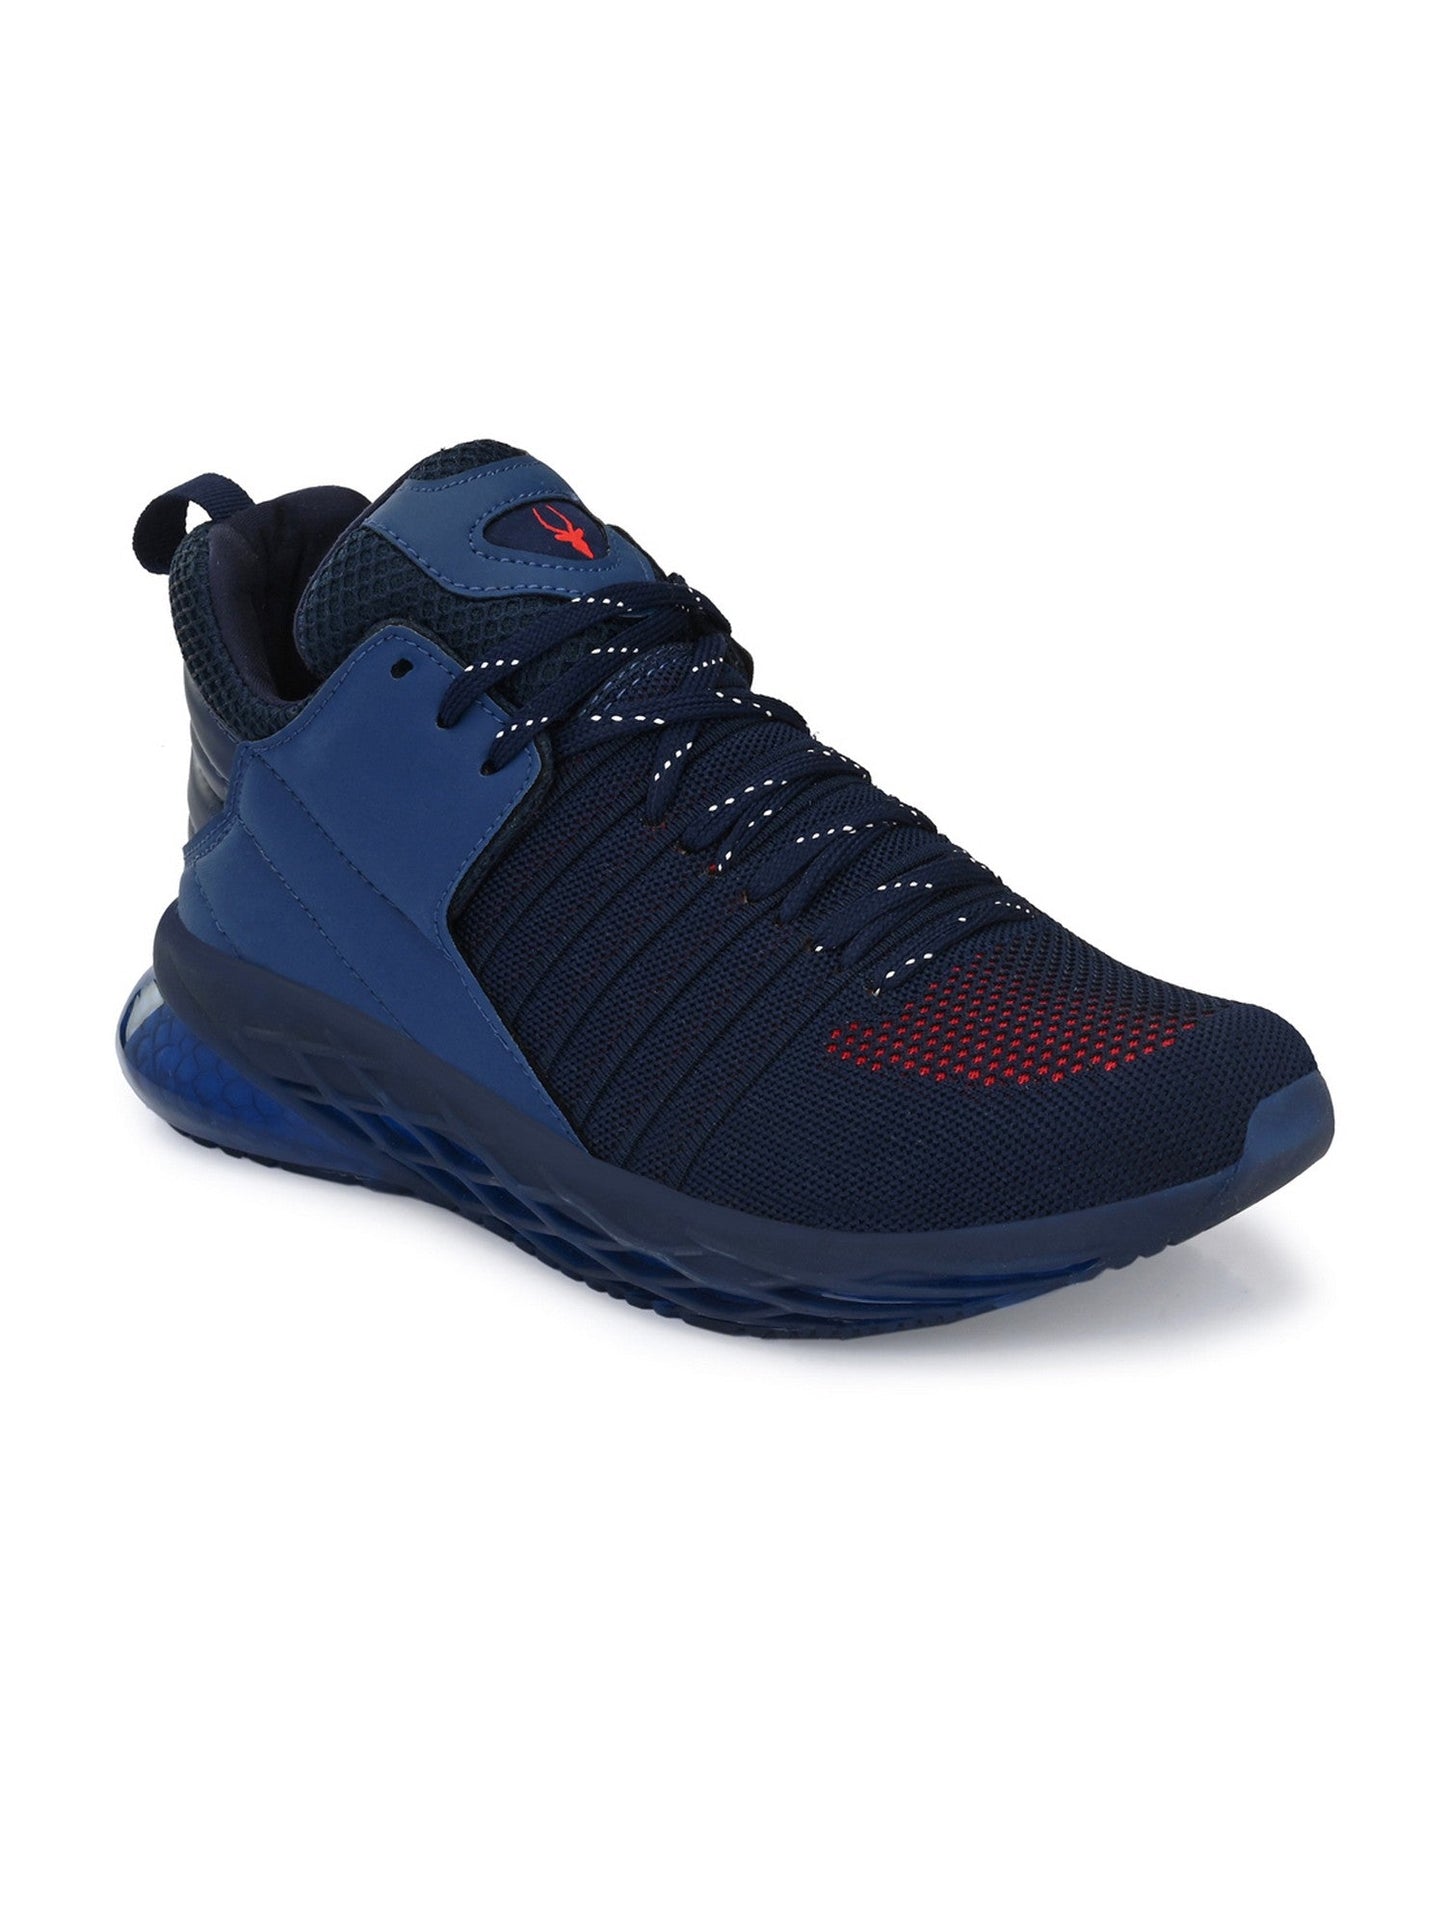 Hirolas® Men's Blue/Red Elite Shock Absorbing Walking running Fitness Athletic Training Gym Ankle Fashion Lace Up Sneaker Sport Shoes (HRLMP03BLU)